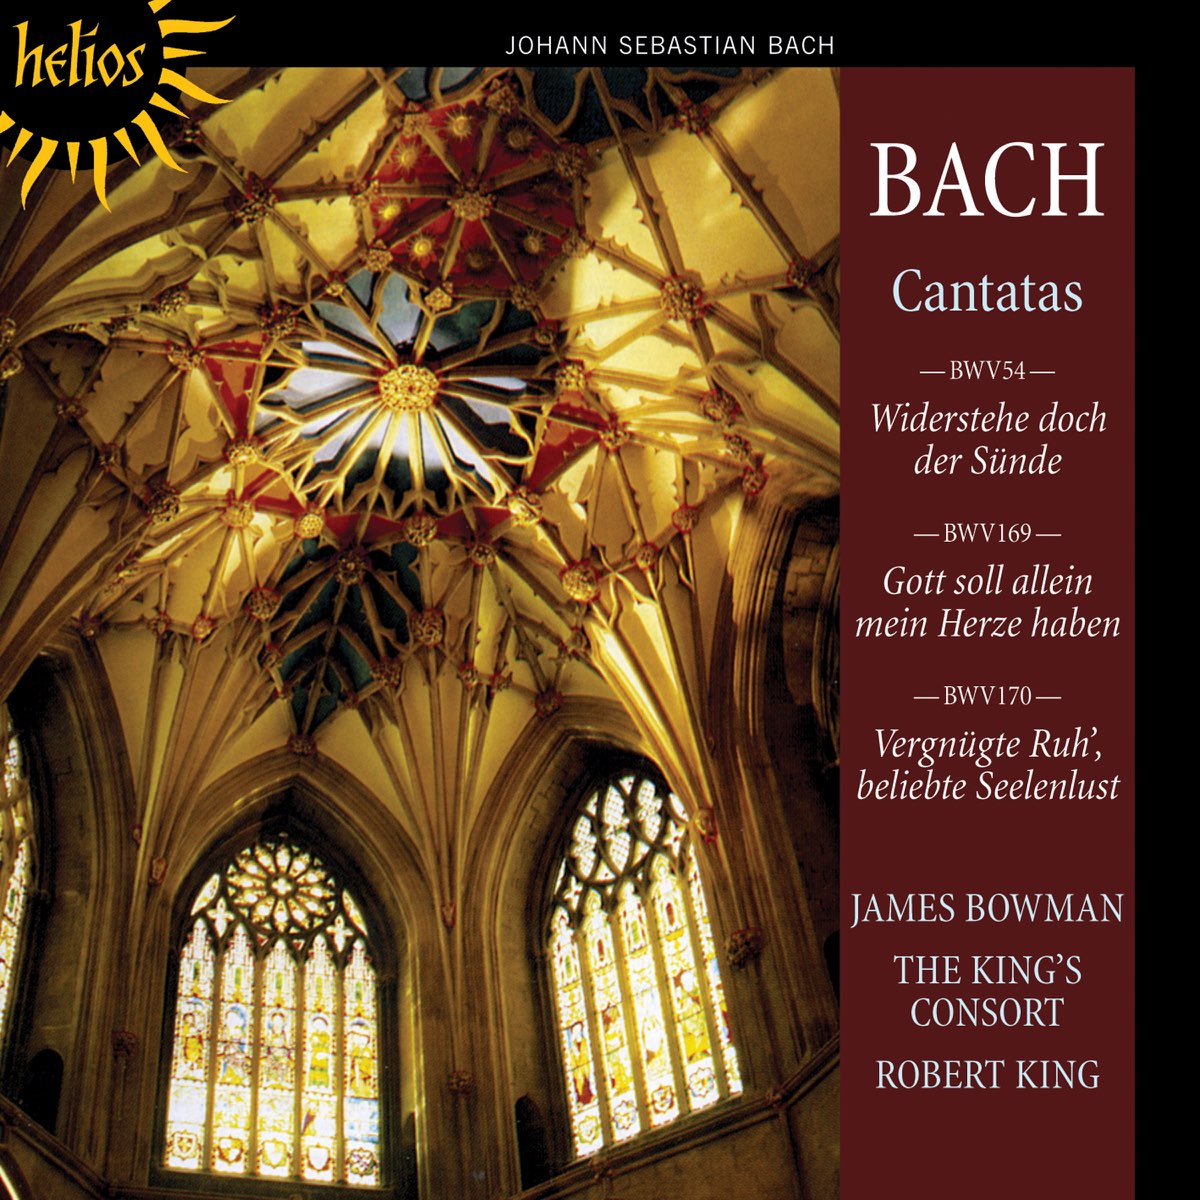 54 169. Bach Cantatas. James Bowman. James Bowman Countertenor. Handel: Fireworks Music & Coronation Anthems the King's Consort, Robert King.